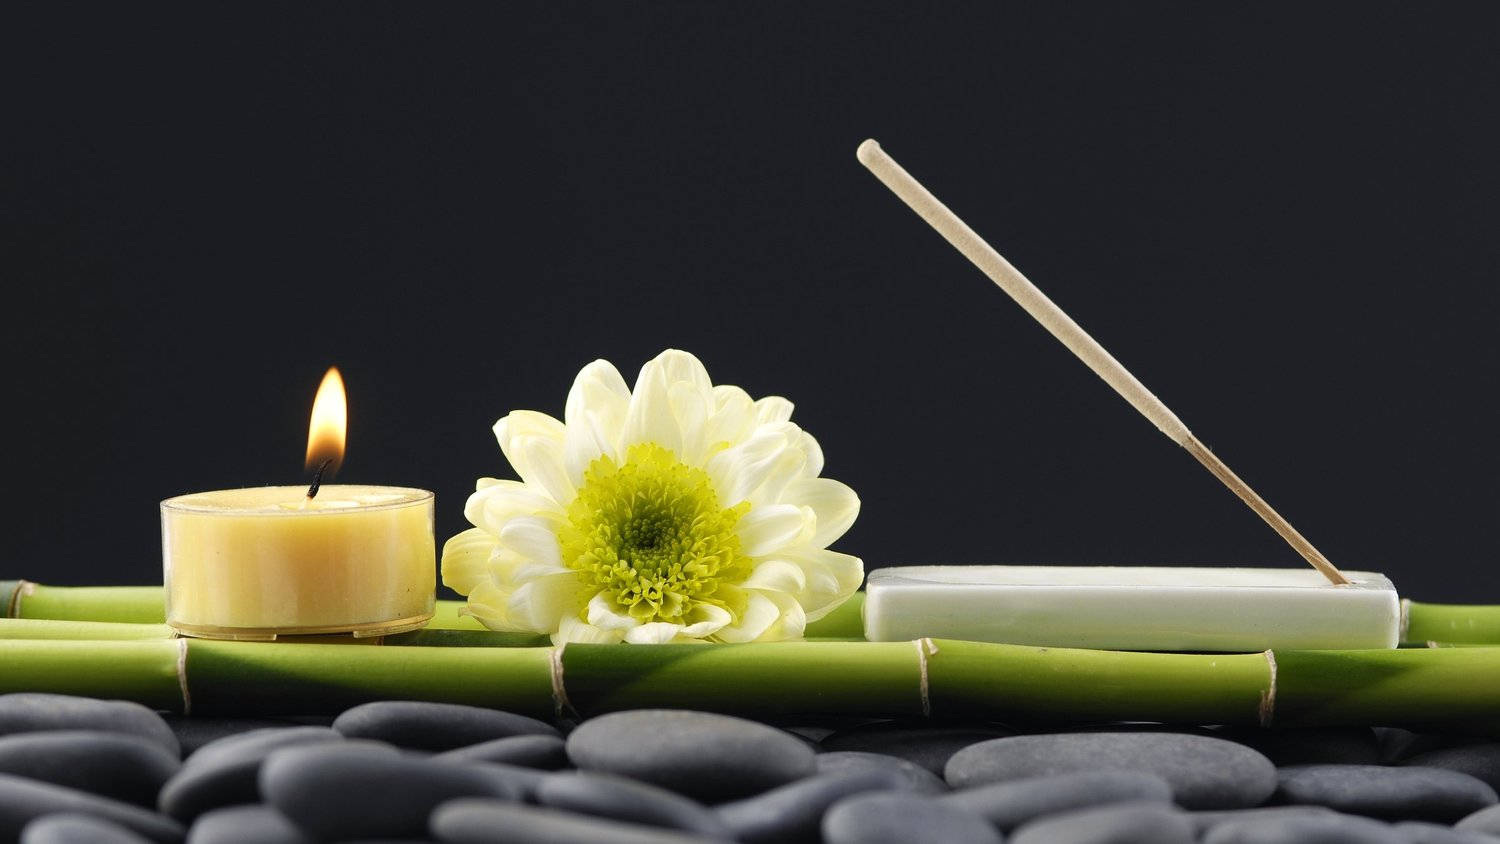 Bamboo 4k Chrysanthemum Candle Stones Massage Wallpaper